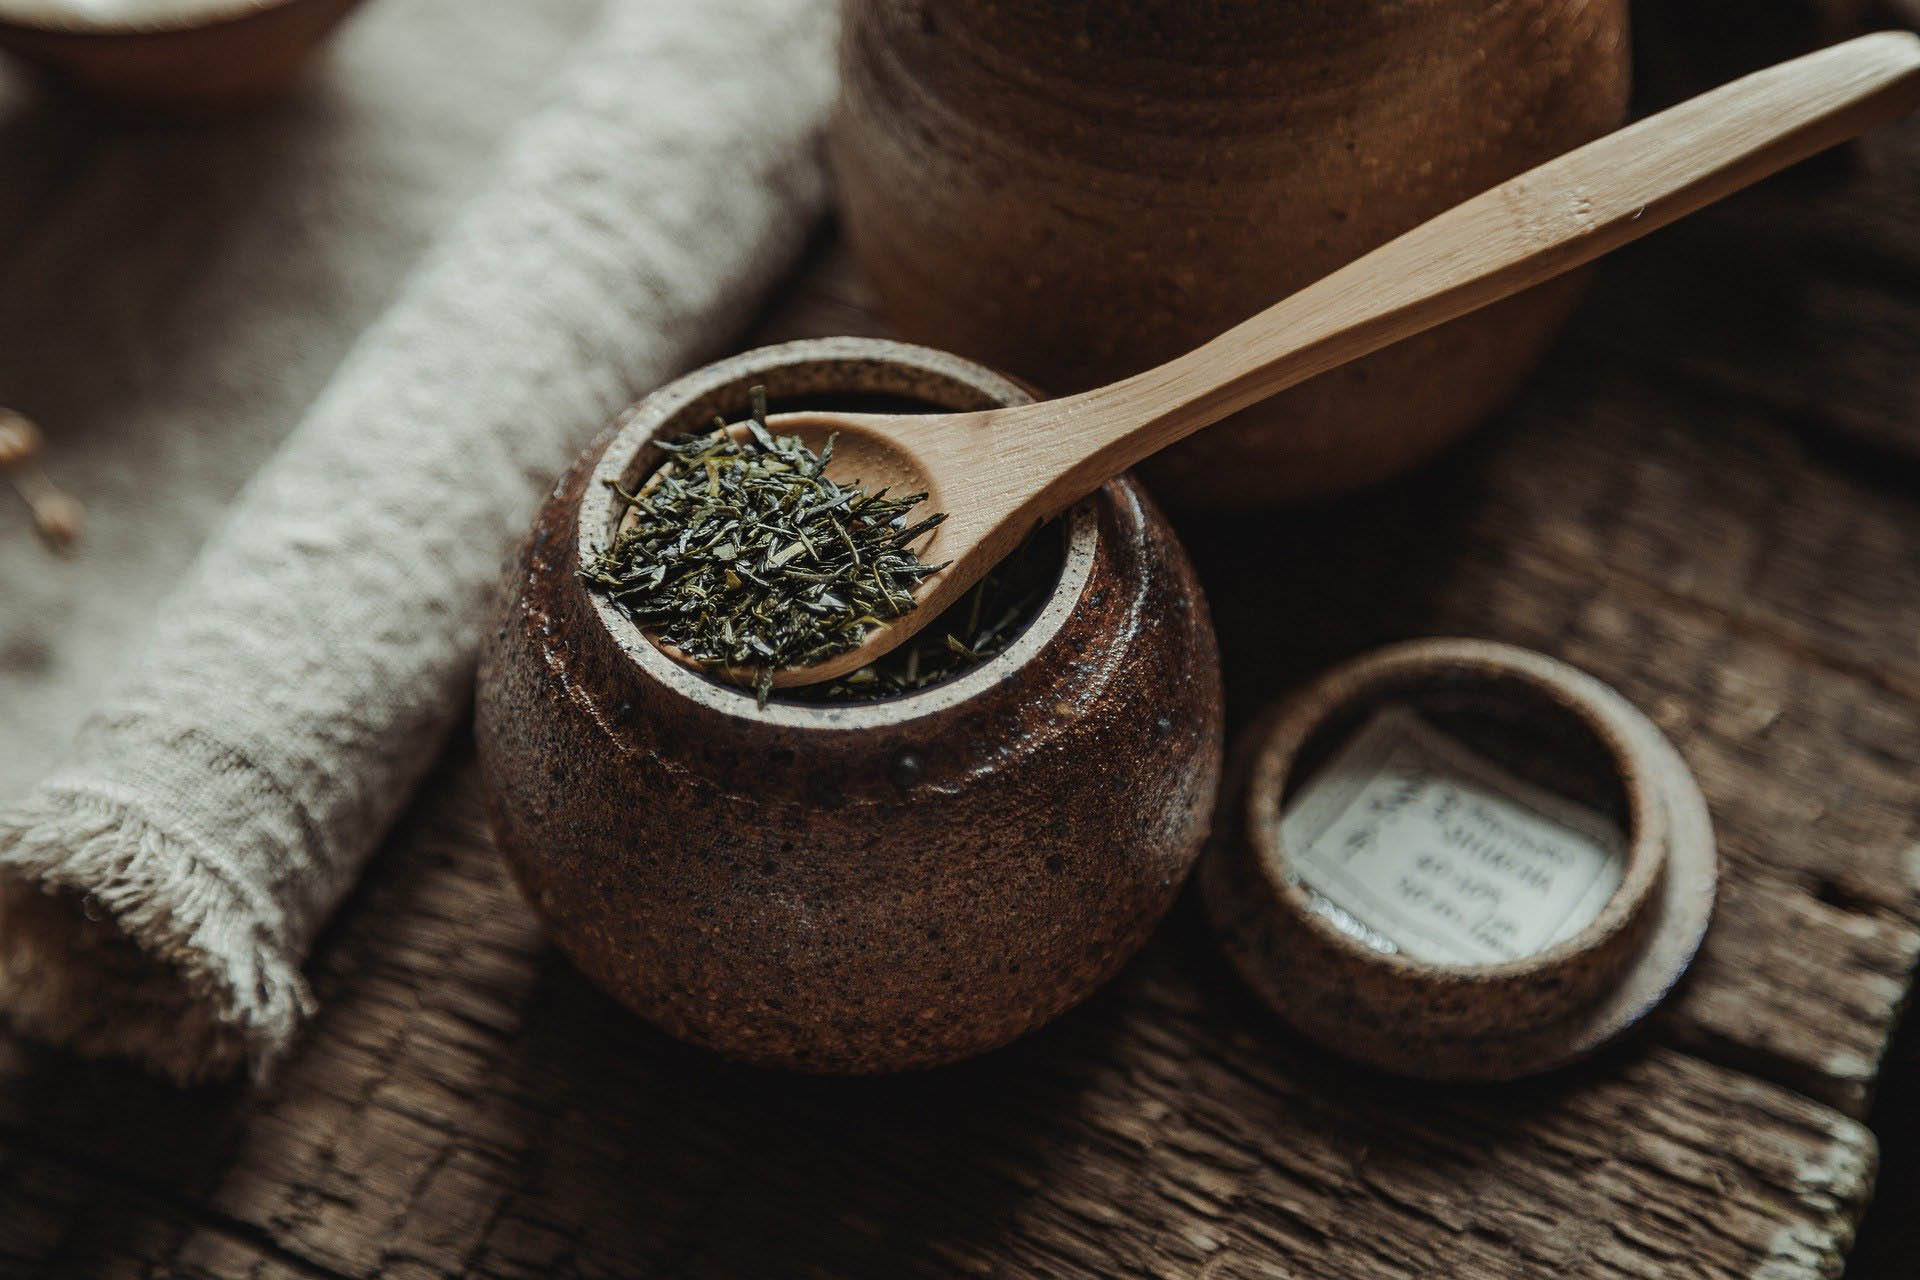 Tea - Photo by Mirko Stödter - From Pixabay - Banques d'iages gratuites par Kozman